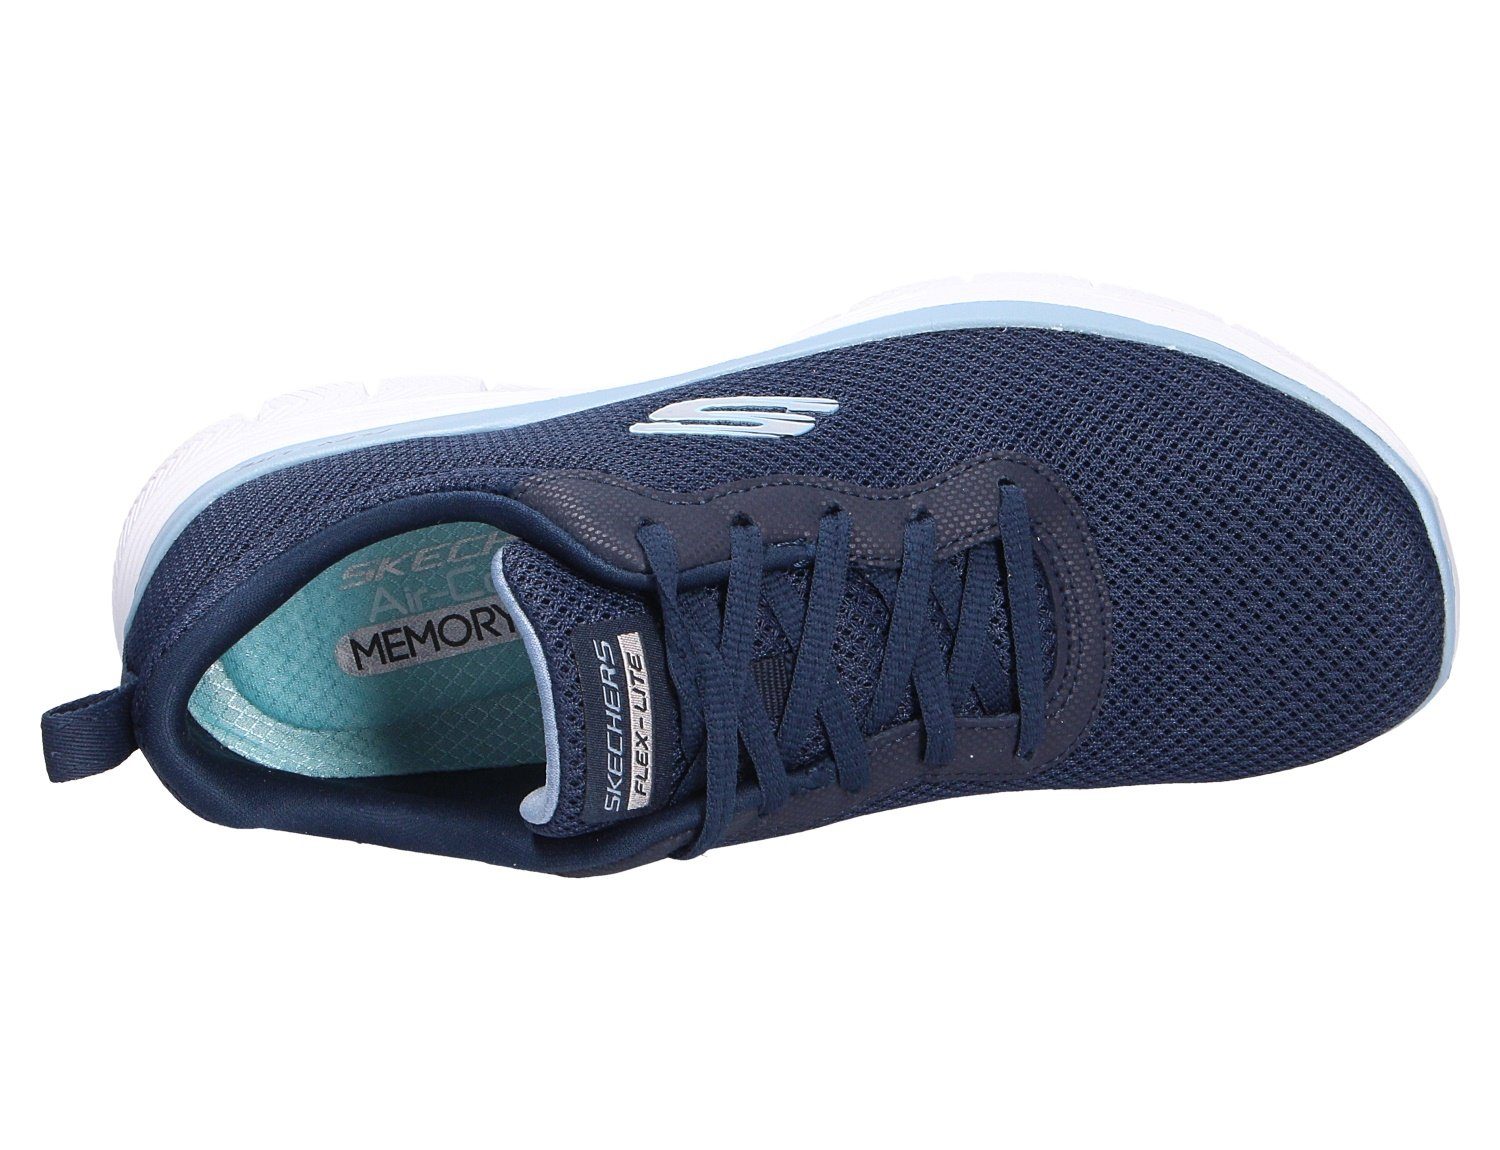 Schnitt Modischer Skechers Sneaker navy/blue